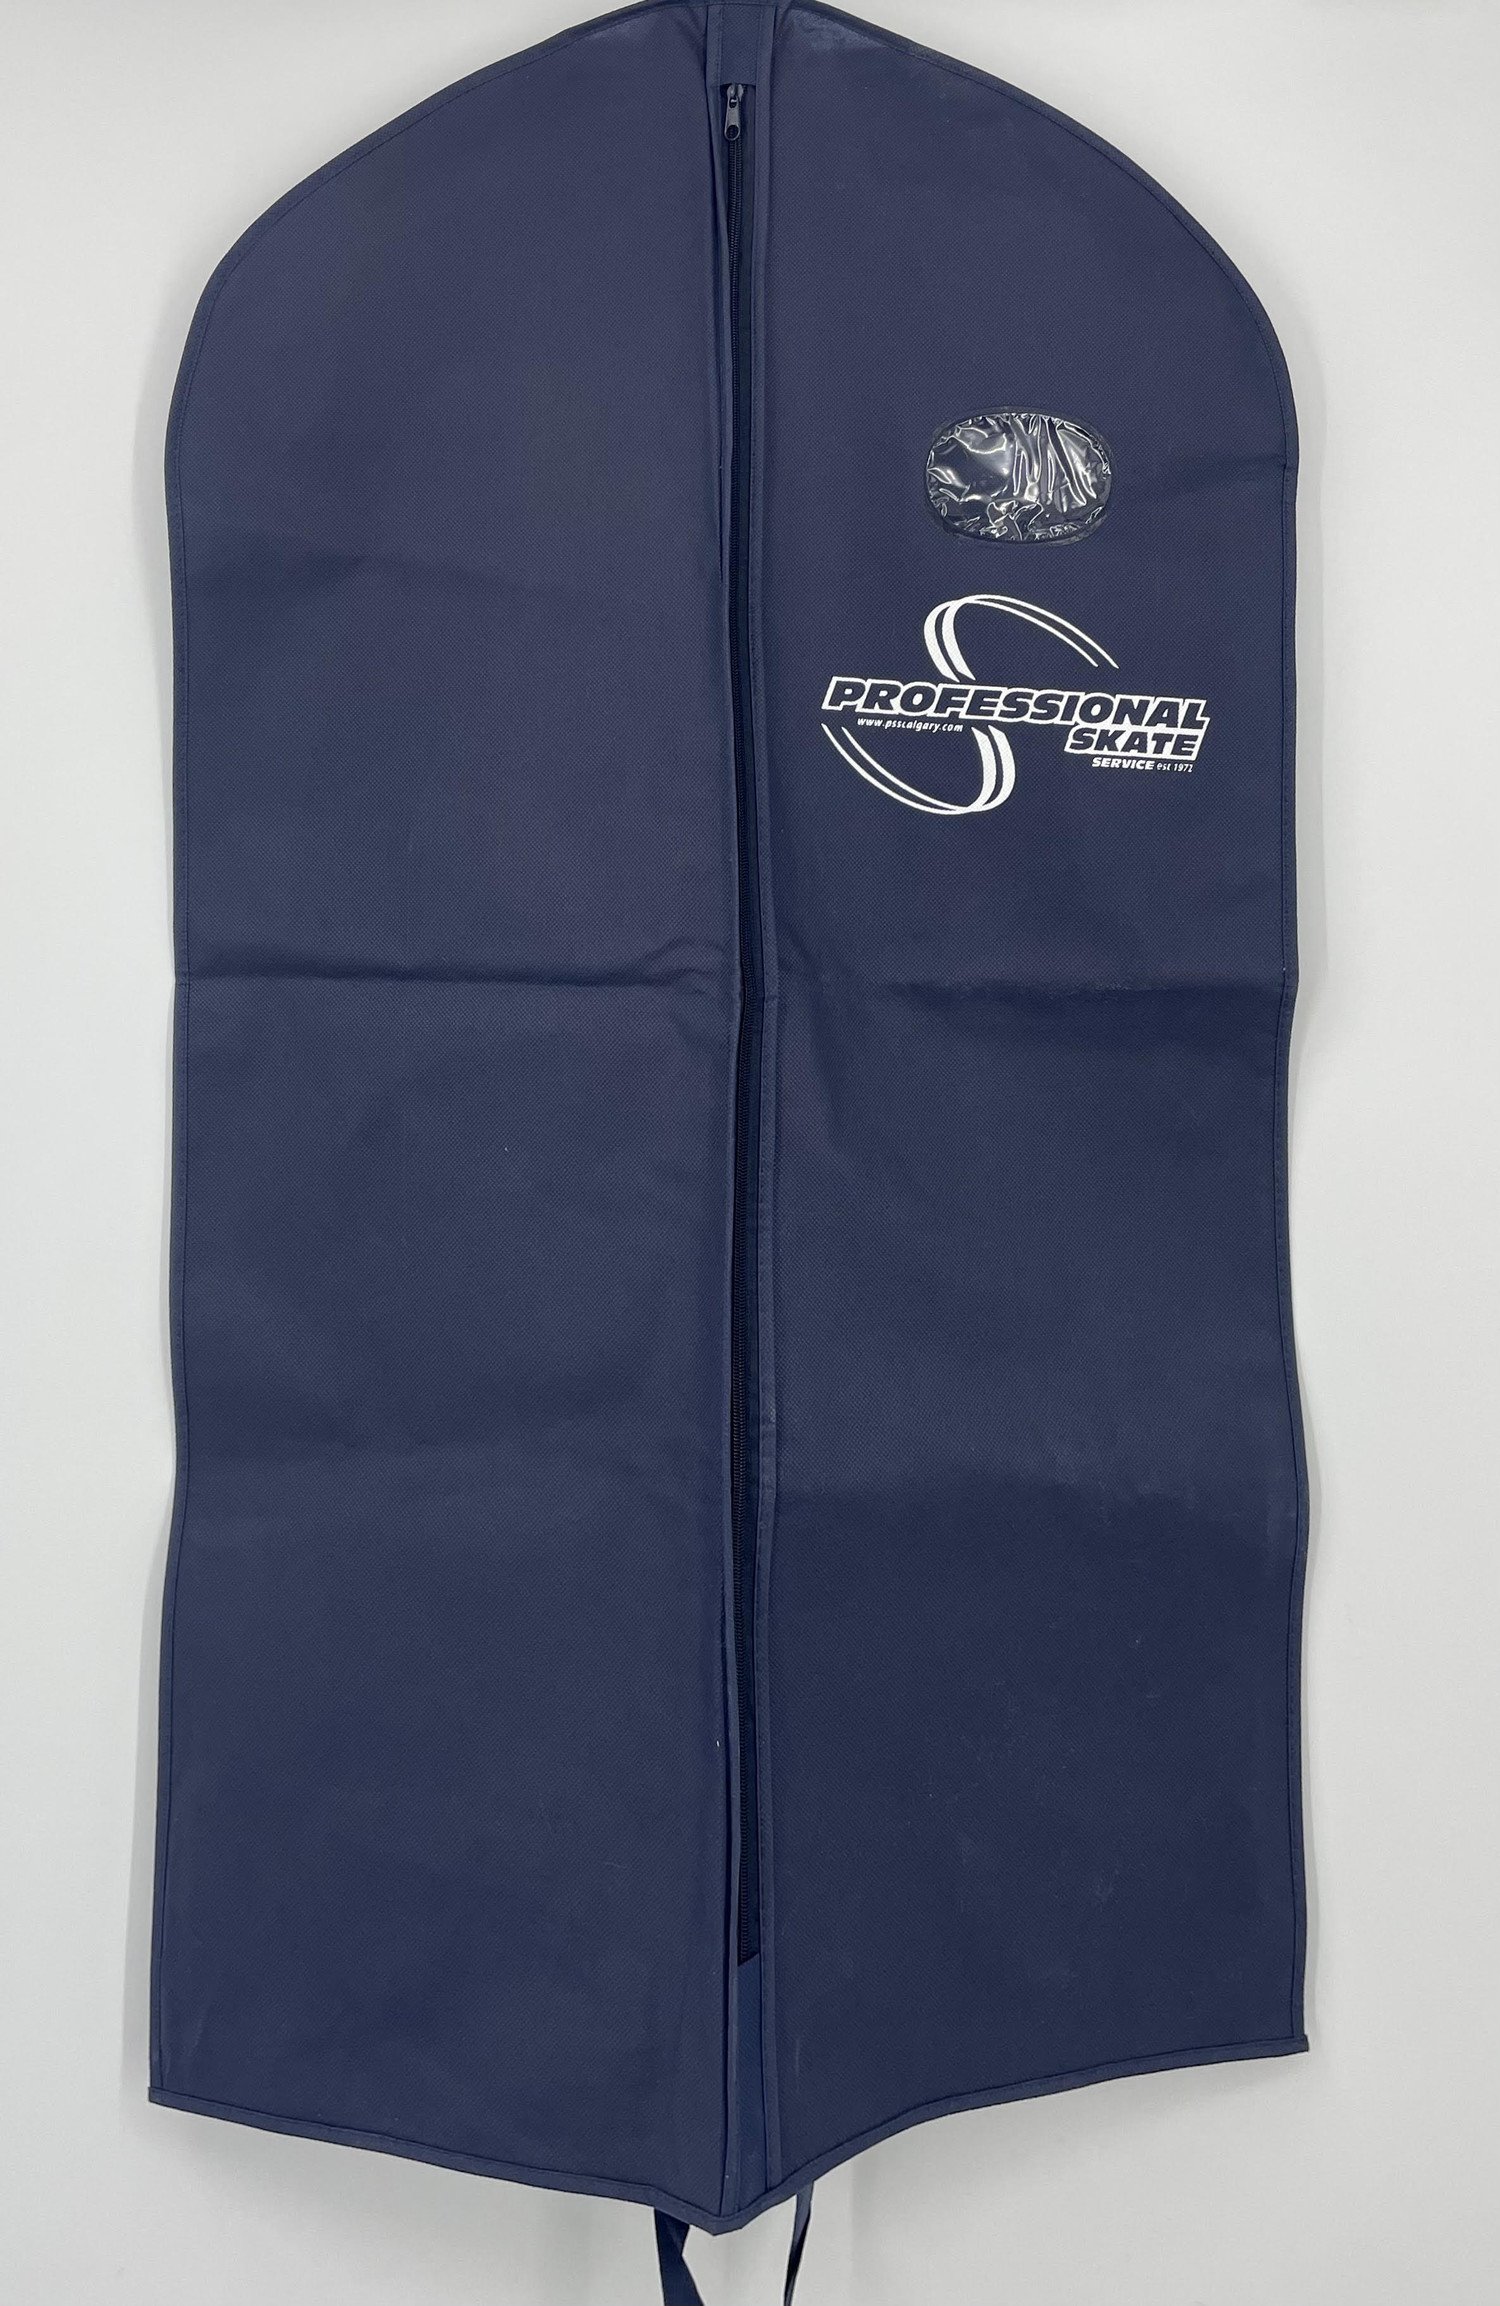 Sports bag (38 L) - Vintage, Fairtex - DragonSports.eu